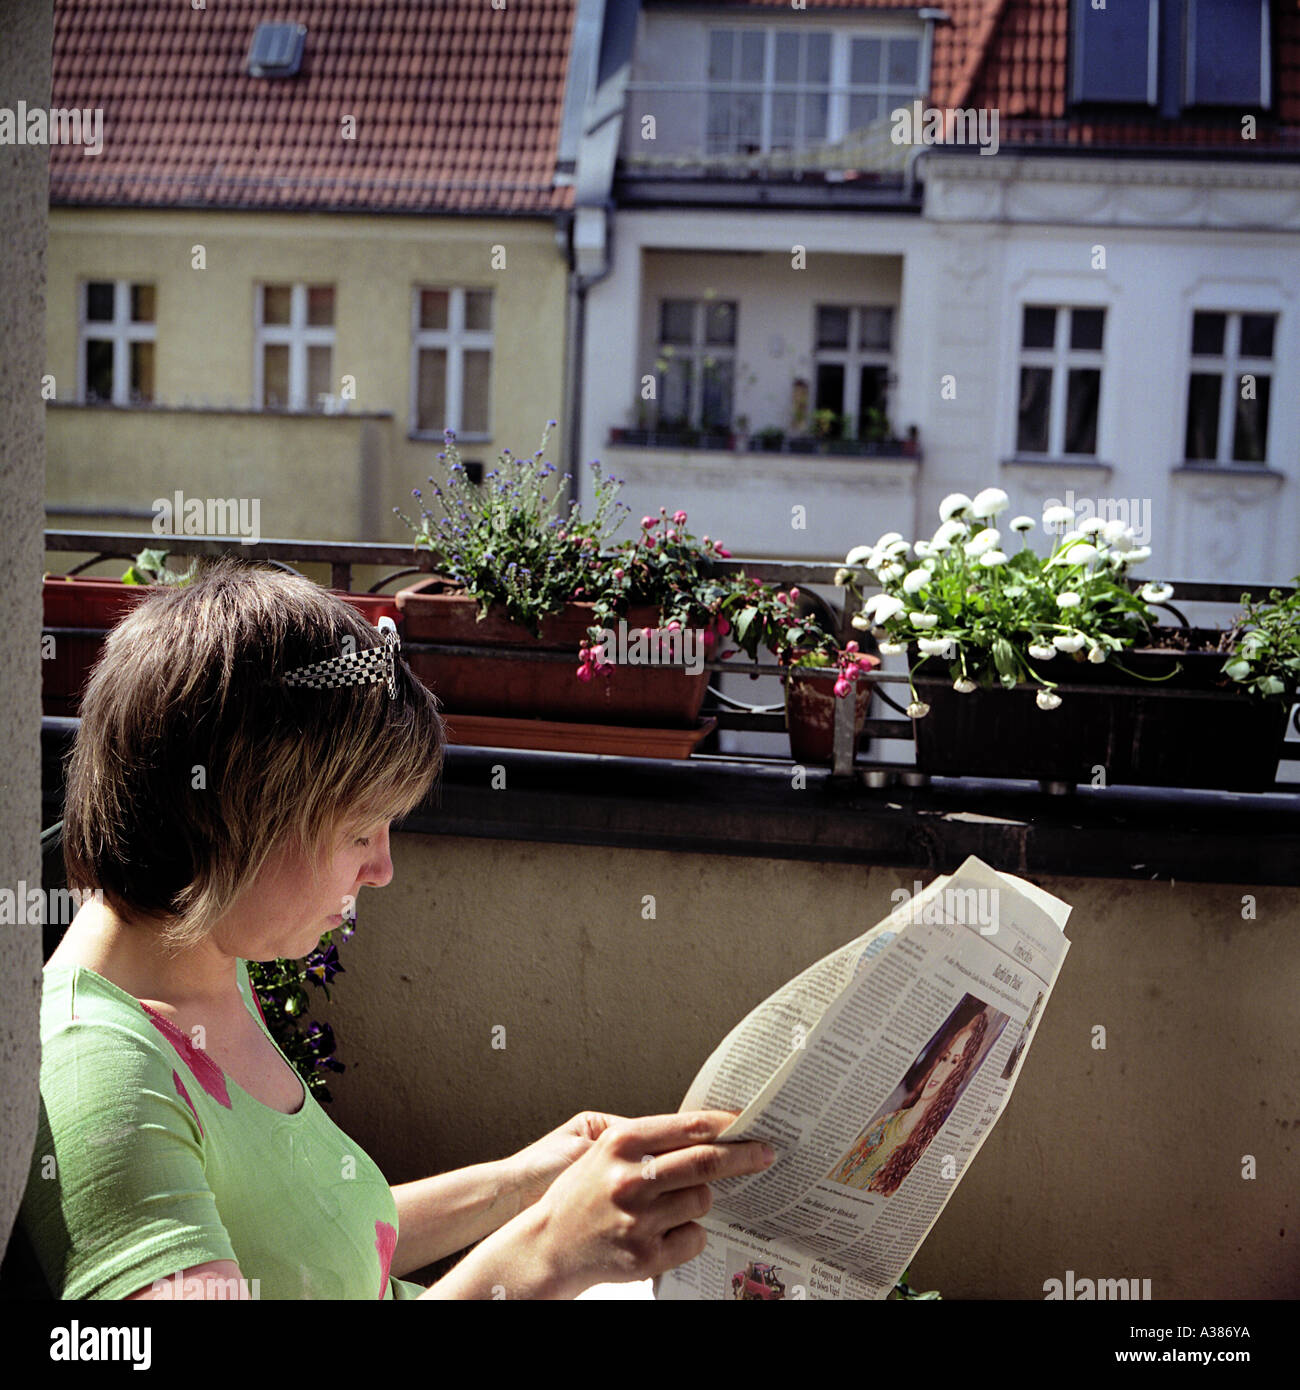 Danuta Schmidt reading a newspaper on her balkony Stock Photo